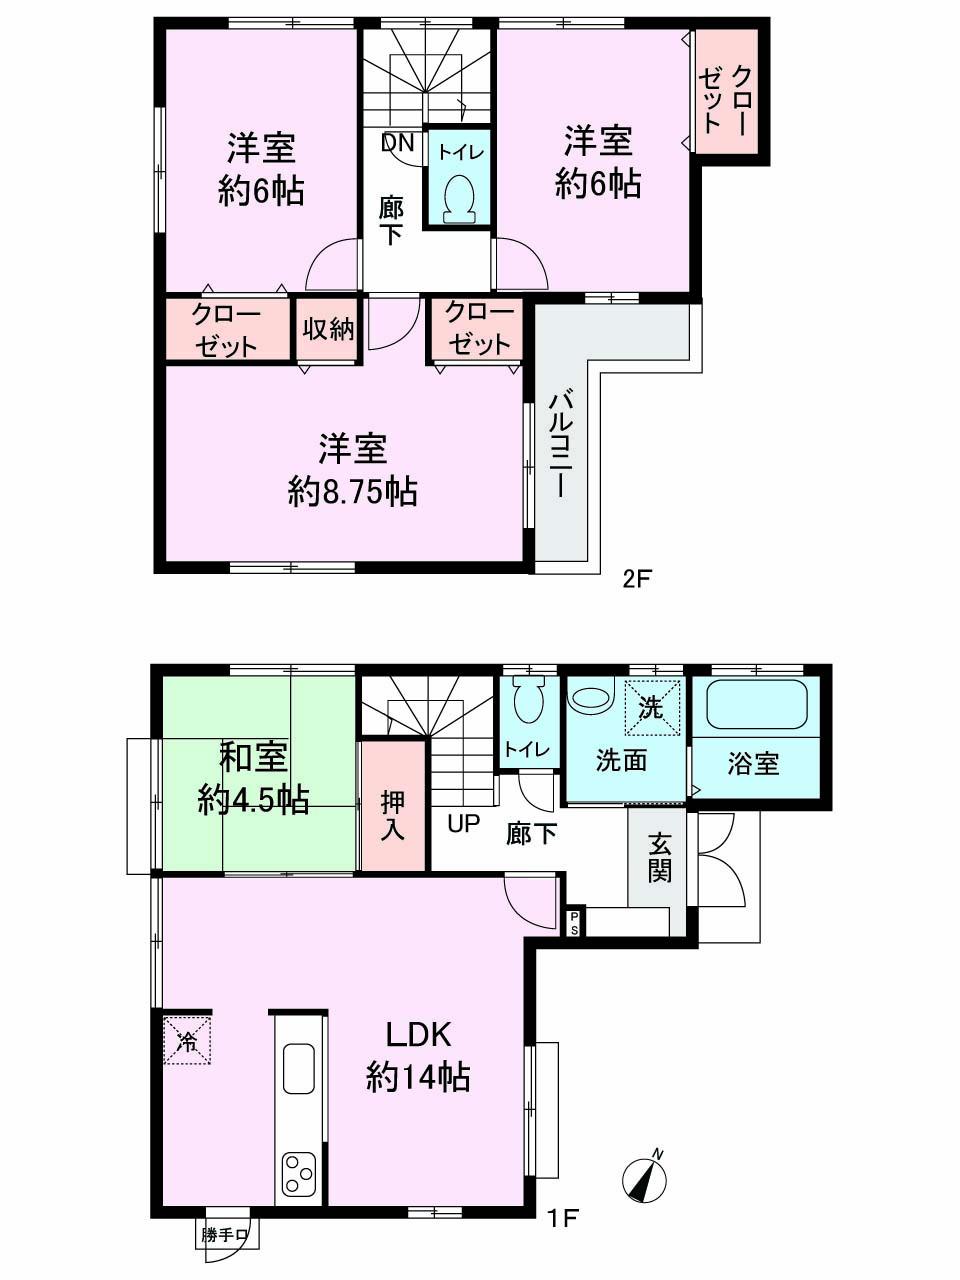 Floor plan. 32,880,000 yen, 4LDK, Land area 120.55 sq m , Building area 94.41 sq m